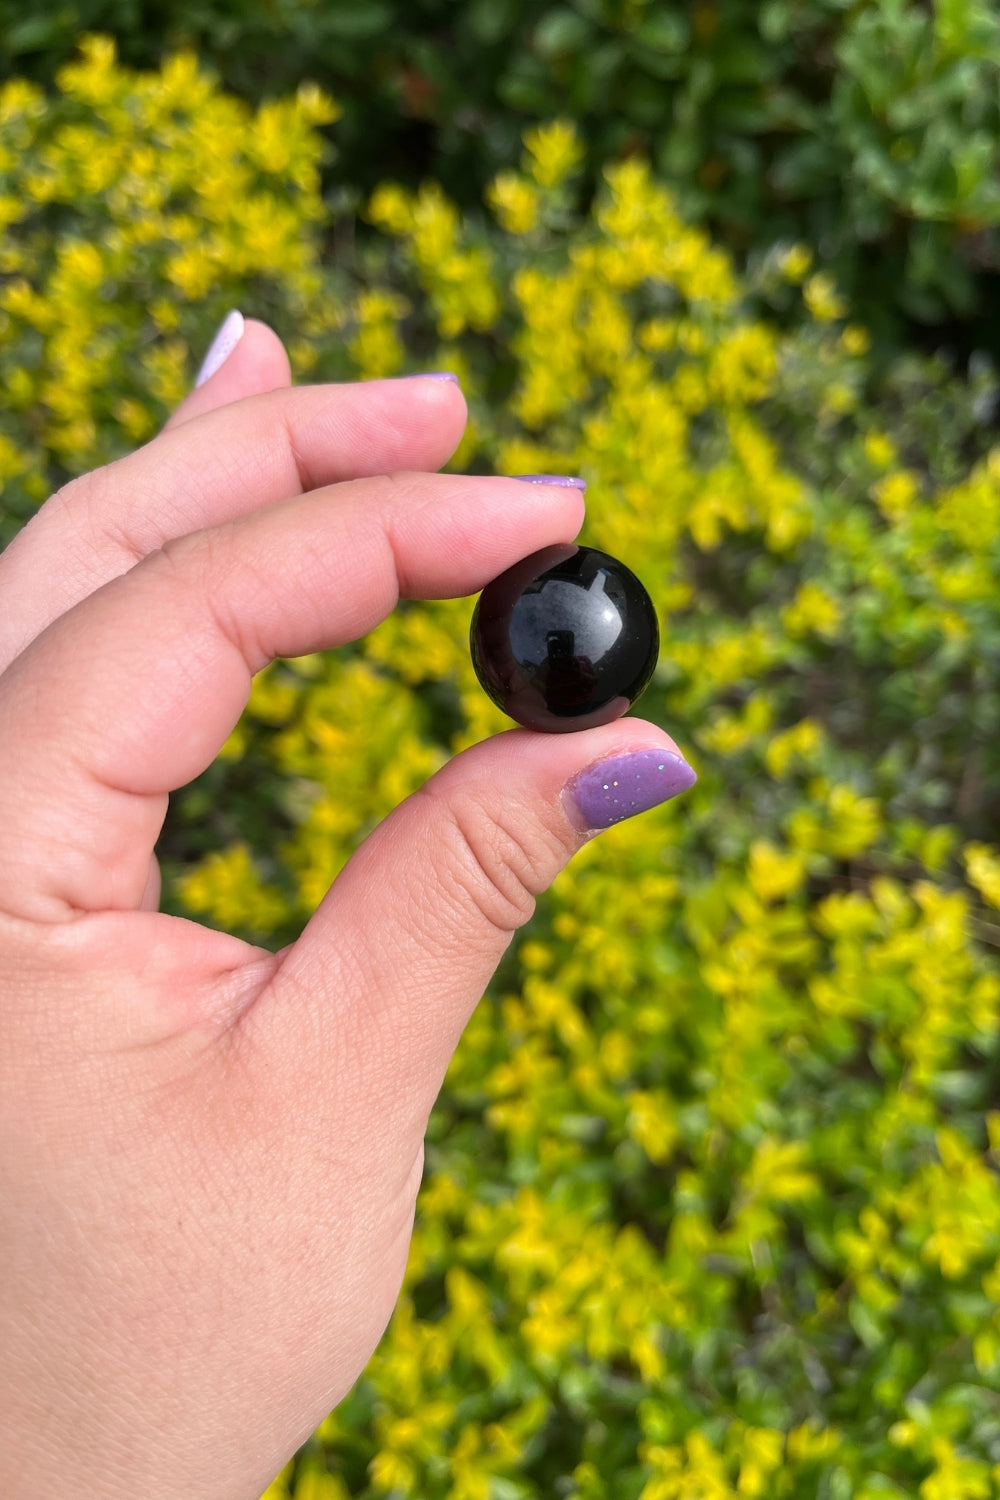 Black Obsidian Sphere #1